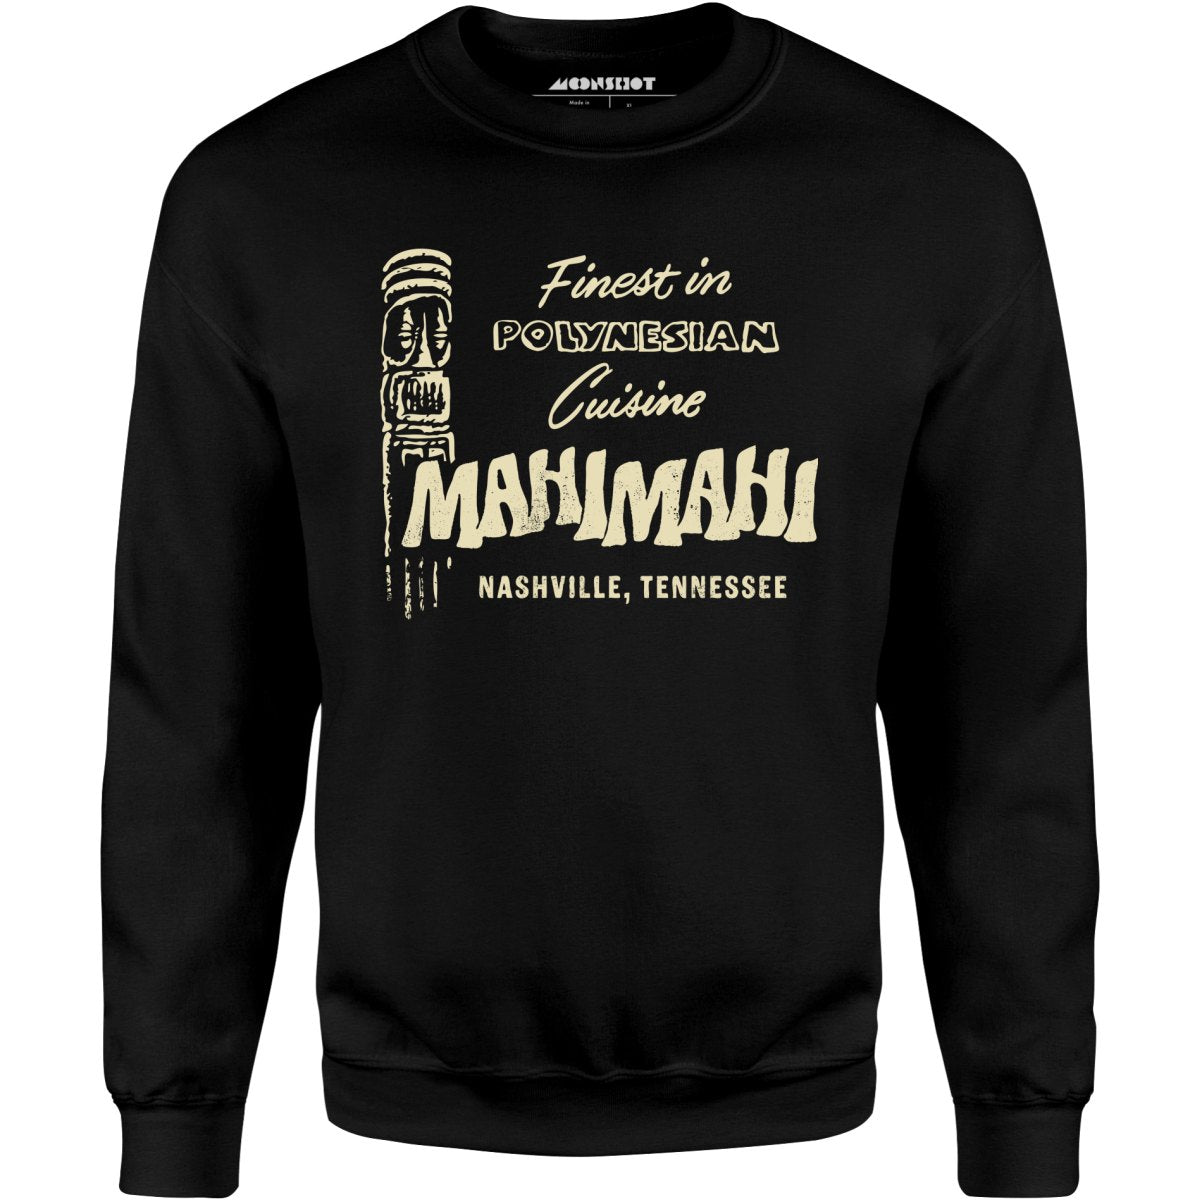 Mahi Mahi - Nashville, TN - Vintage Tiki Bar - Unisex Sweatshirt